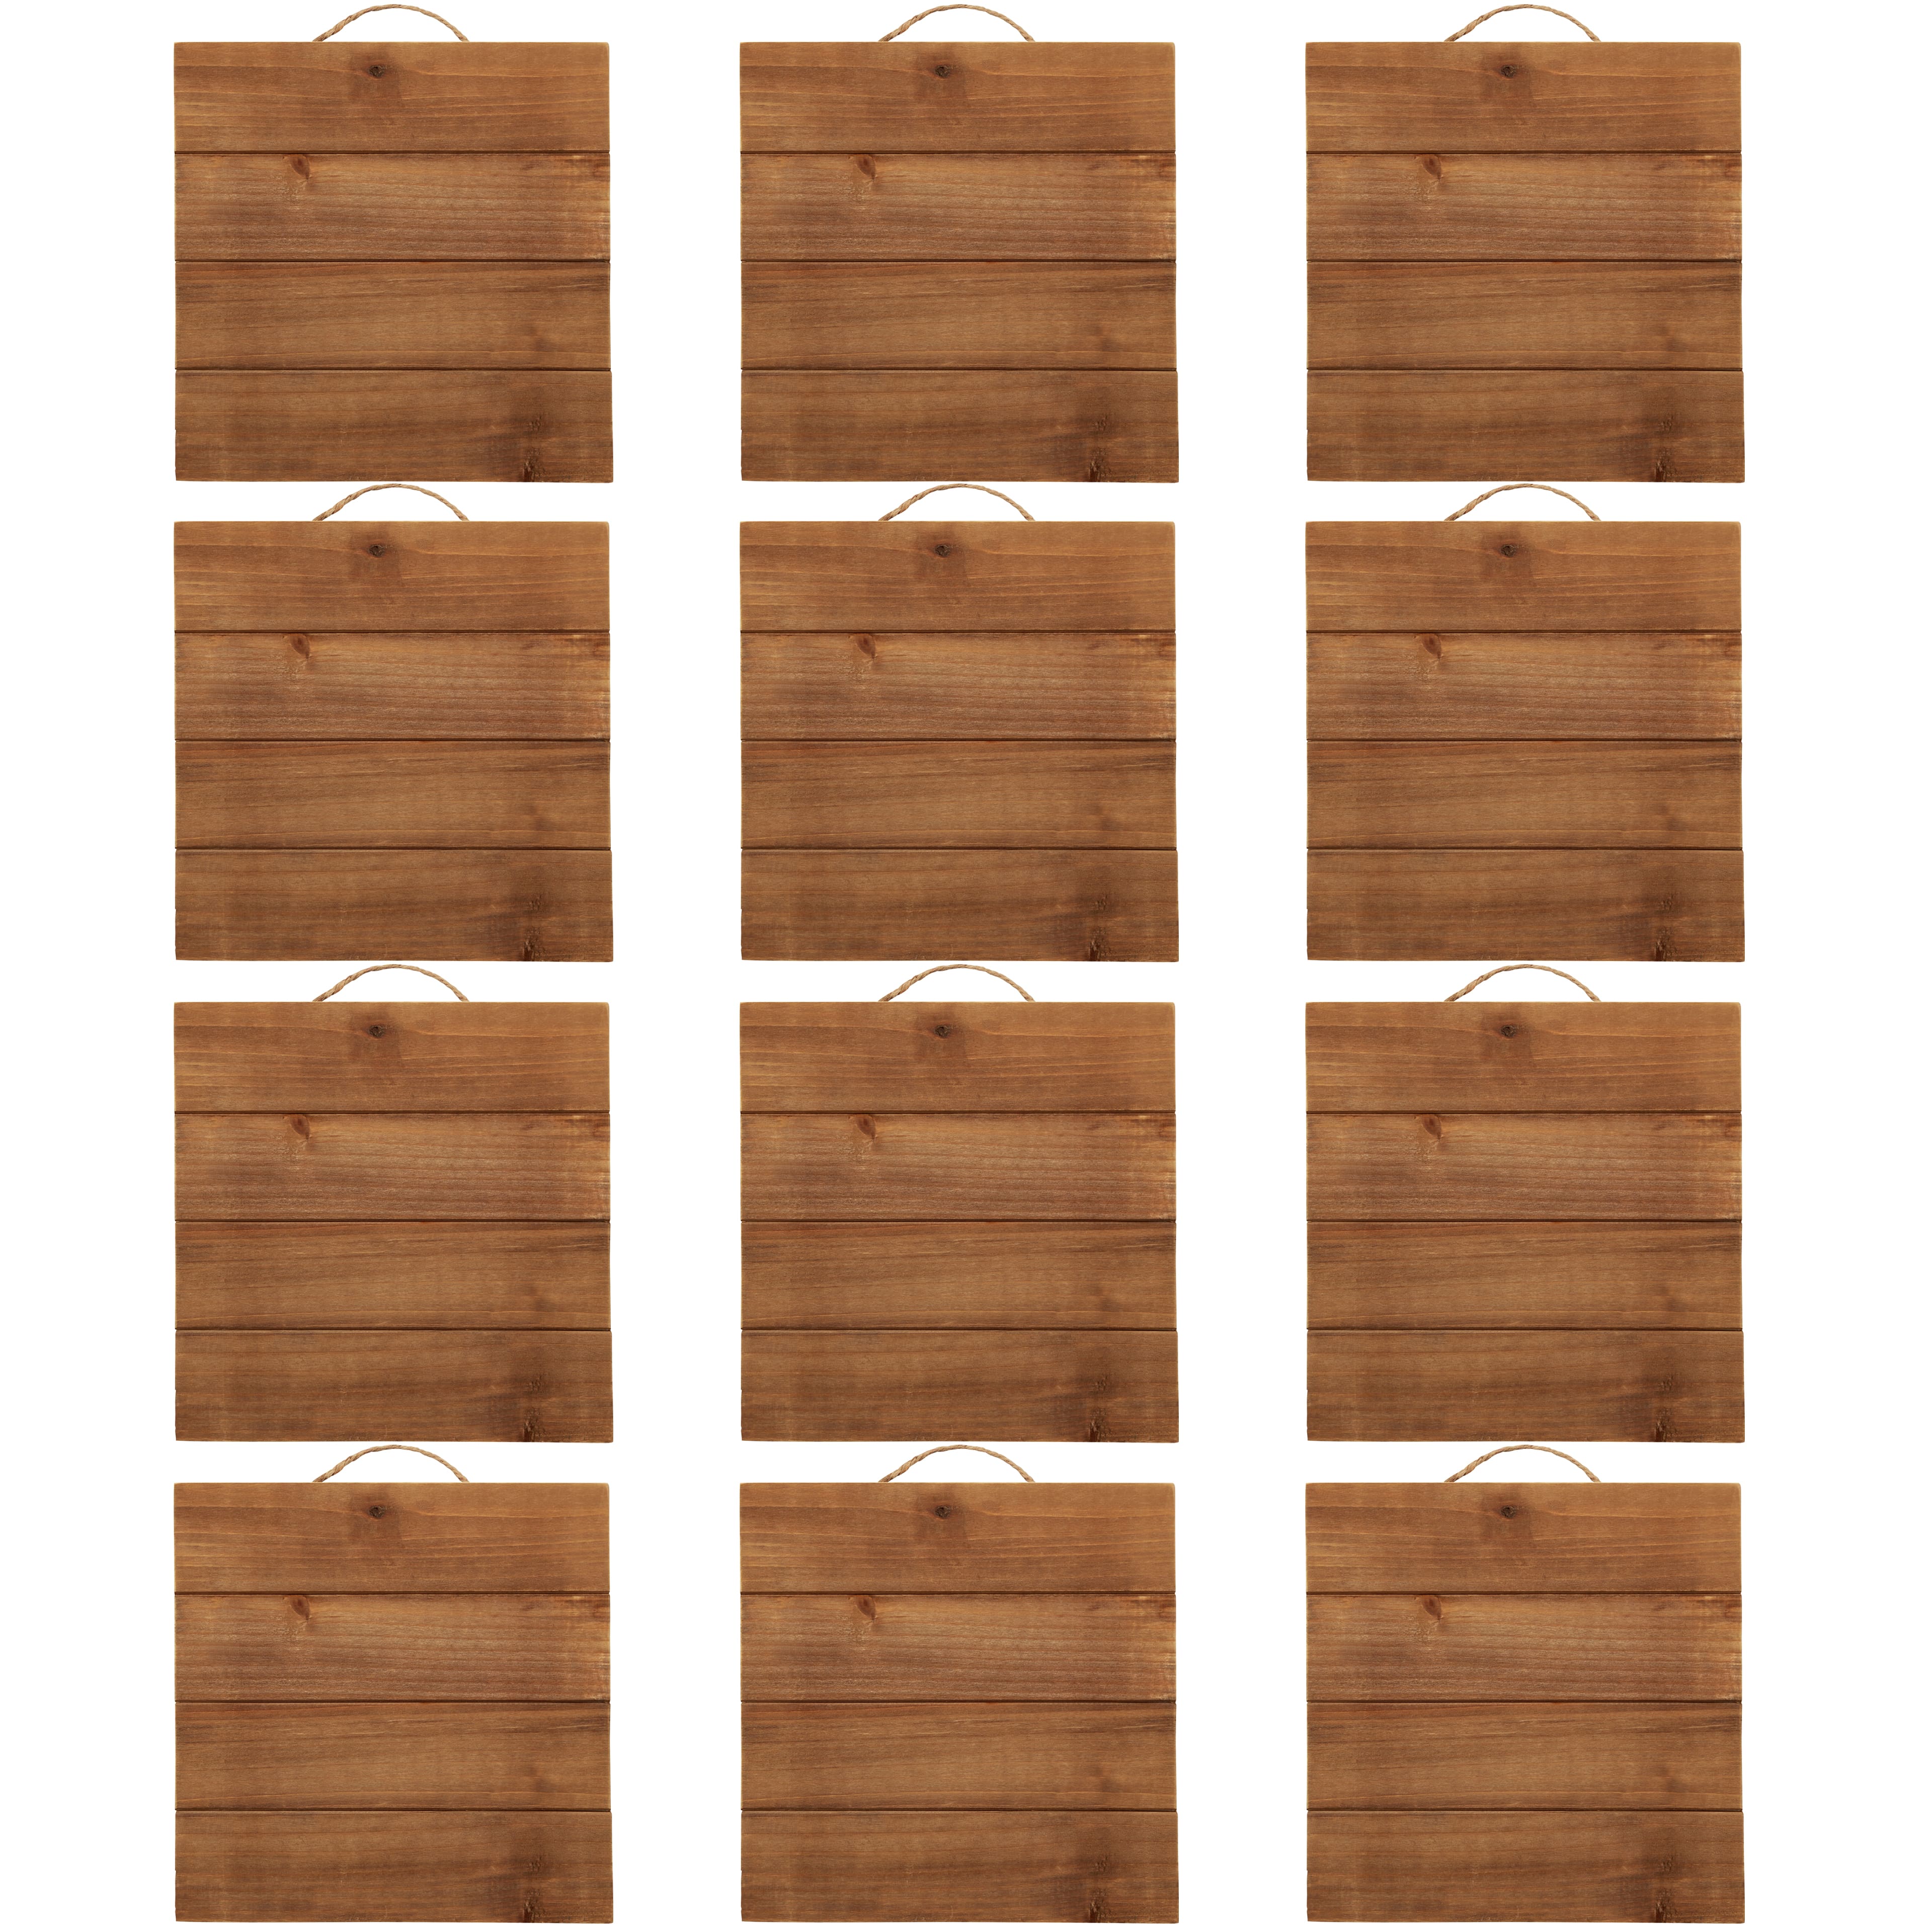 12 Pack: 10 Square Wood Pallet Plaque by Make Market®